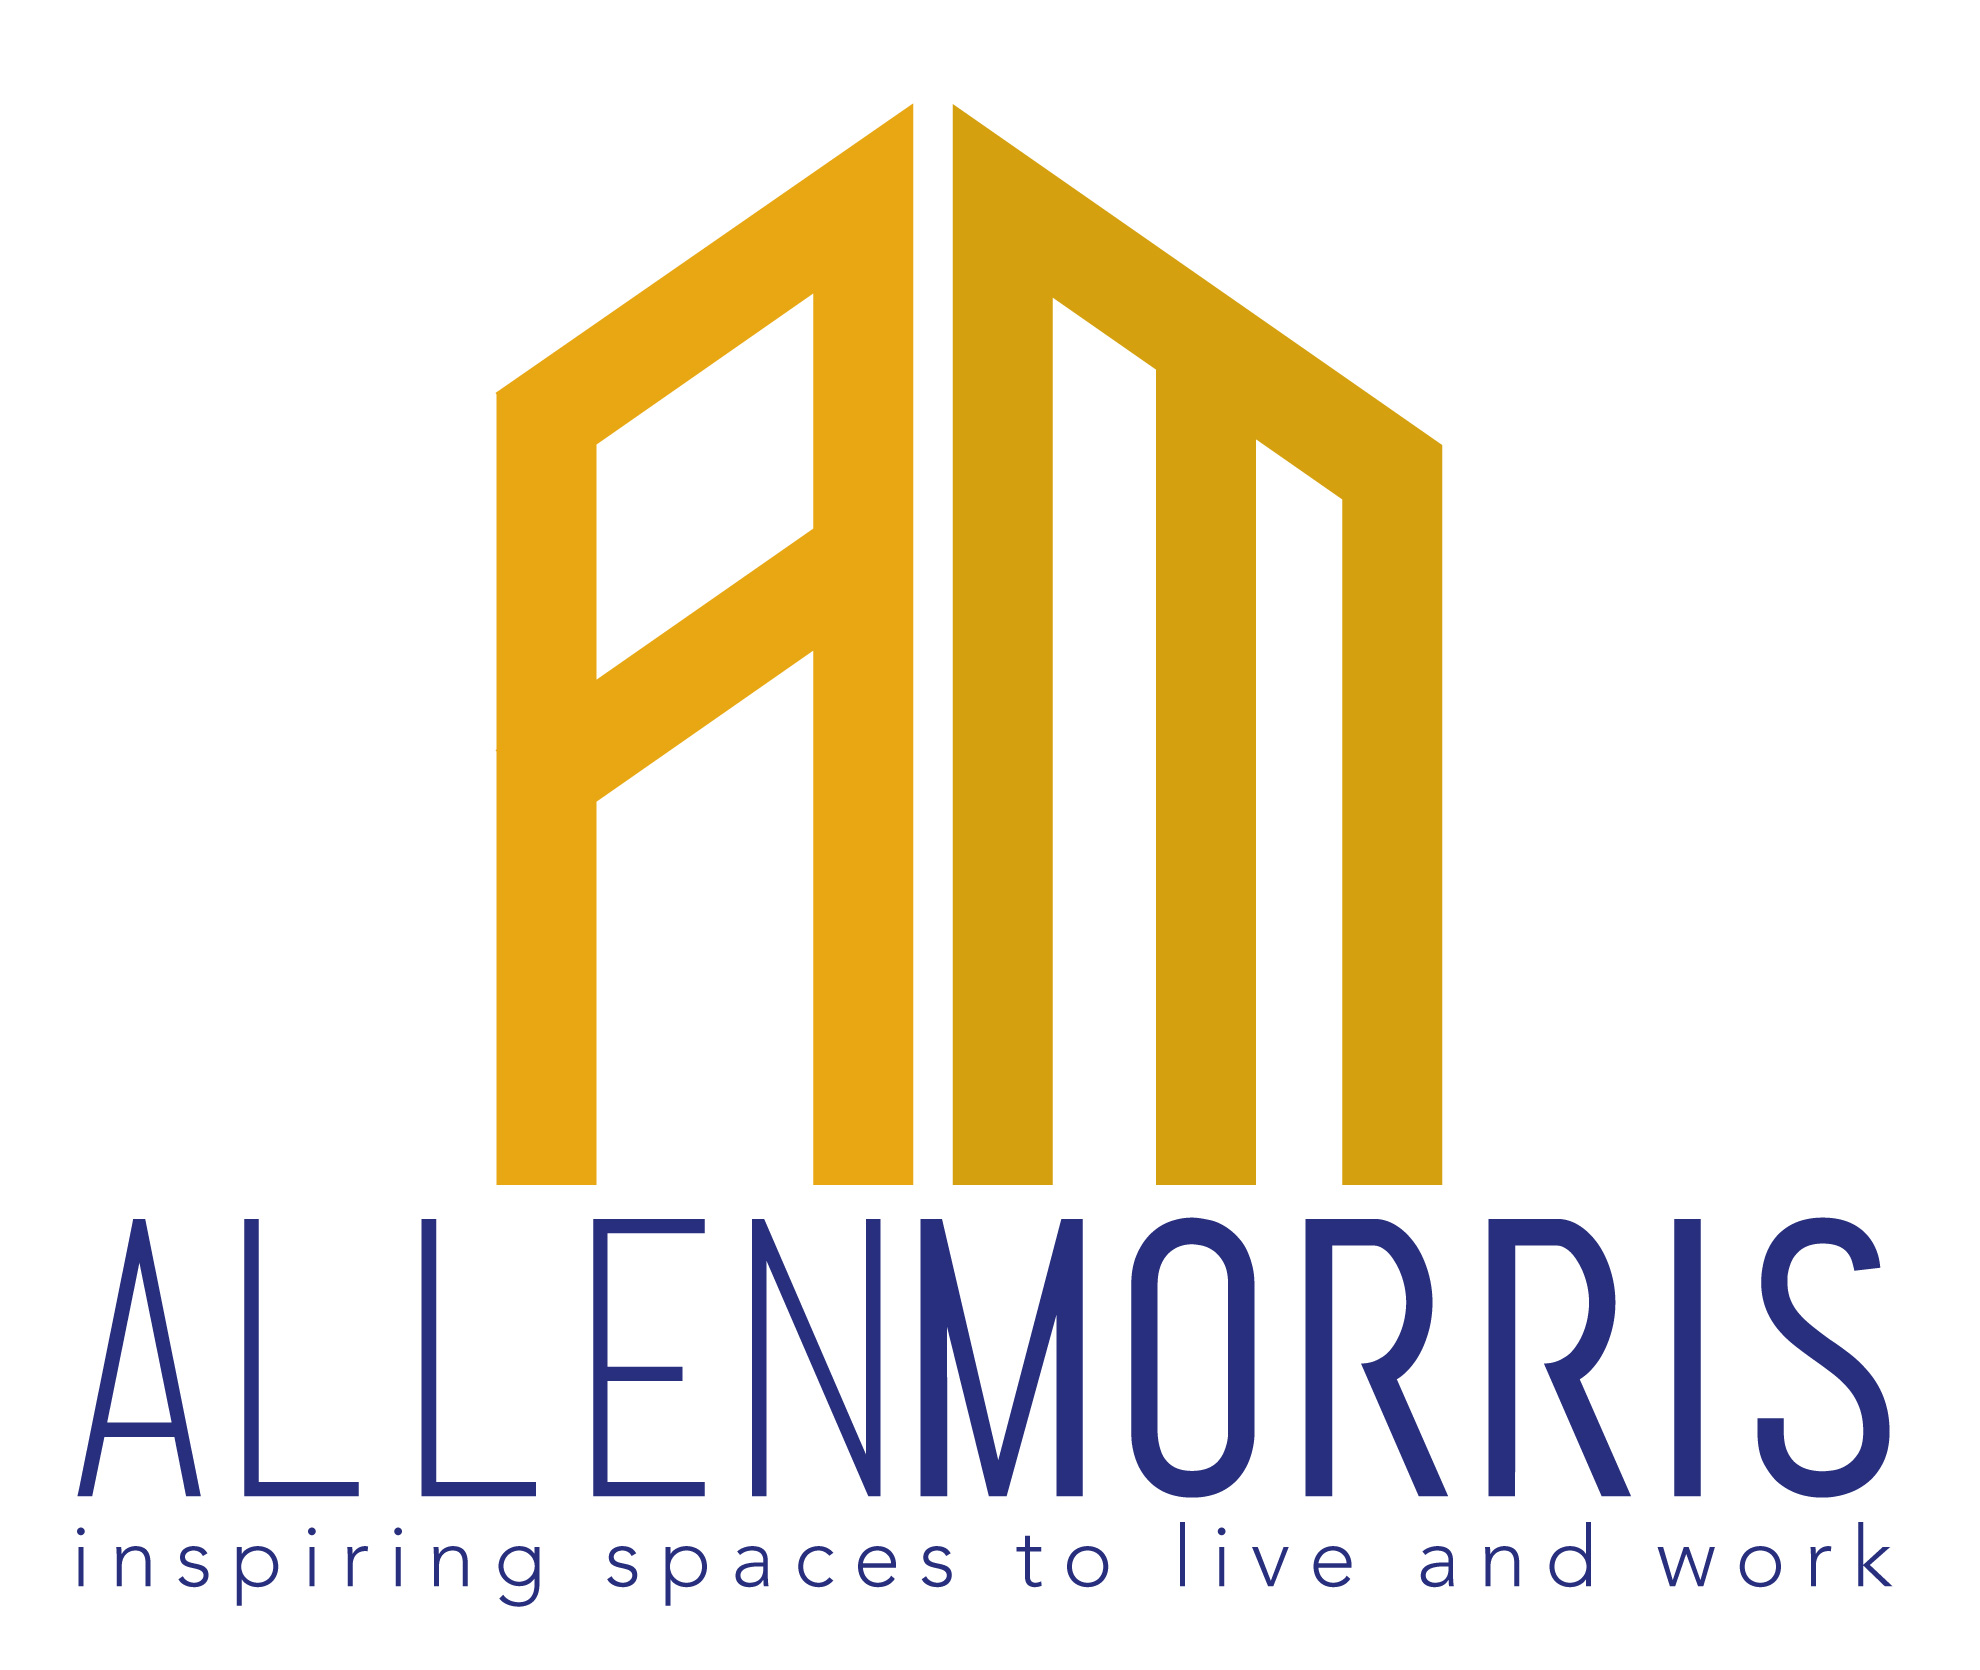 The Allen Morris Company